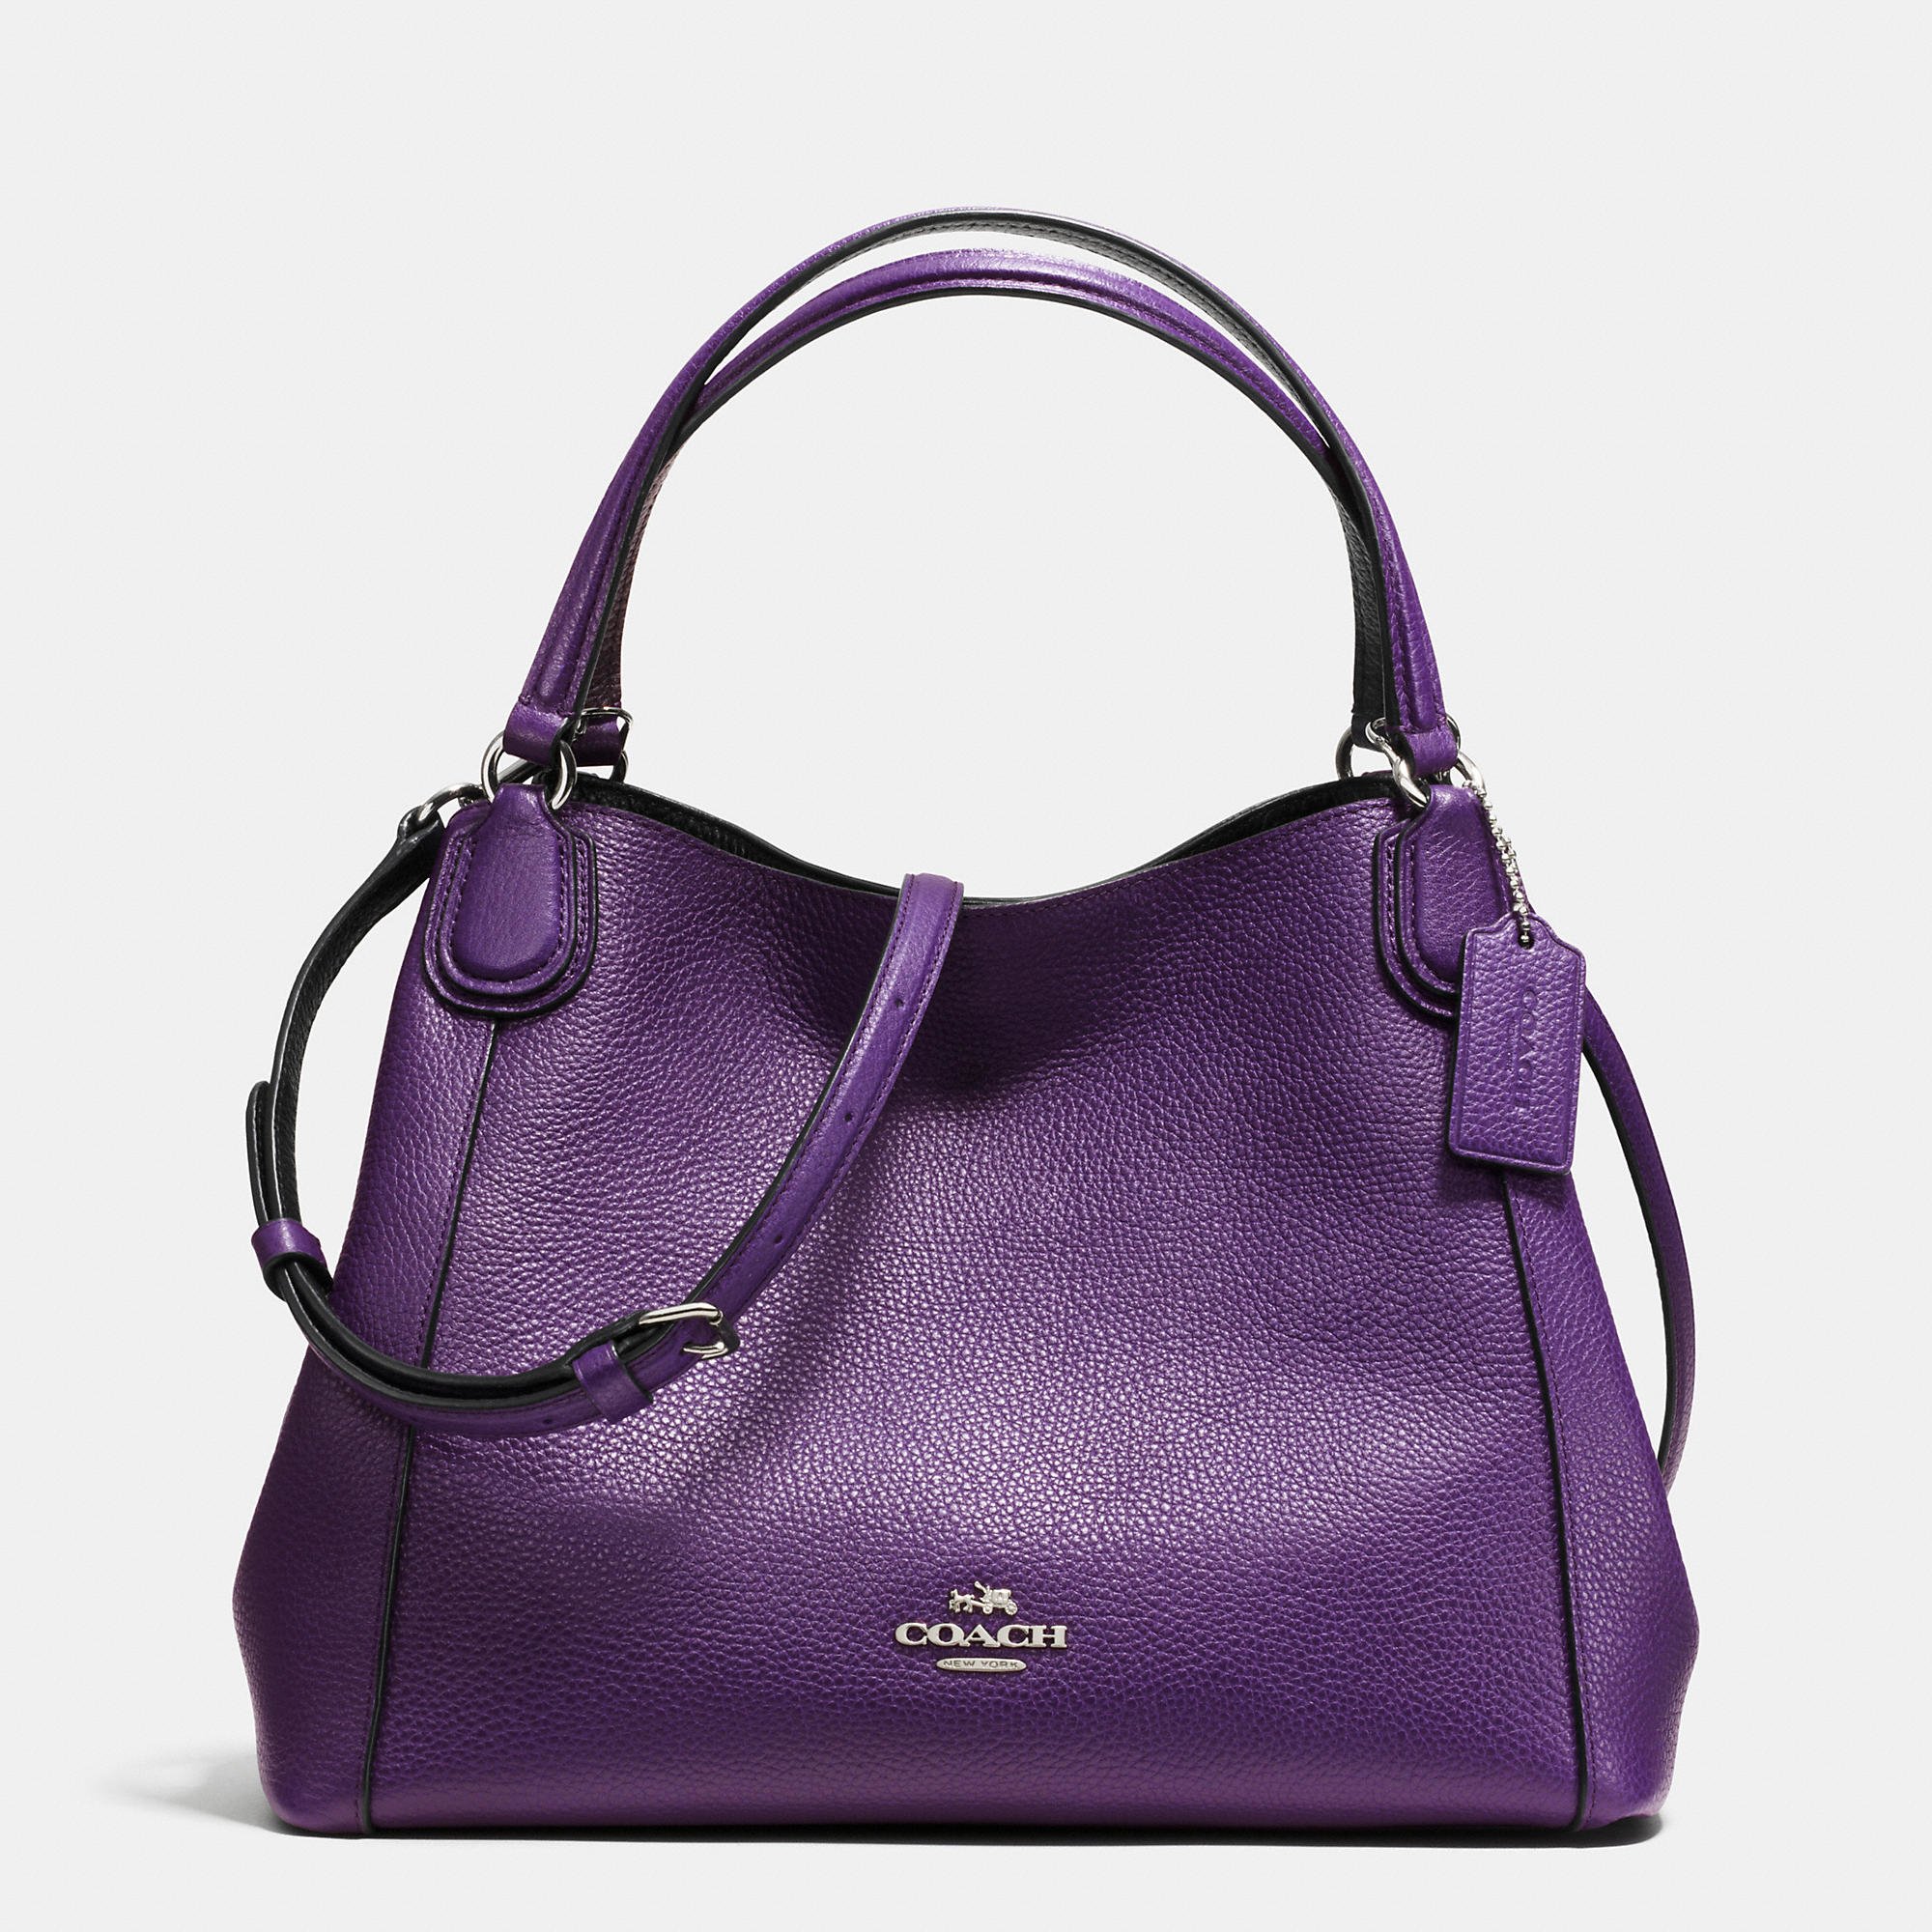 Lyst - Coach Edie 28 Pebbled-Leather Shoulder Bag in Purple